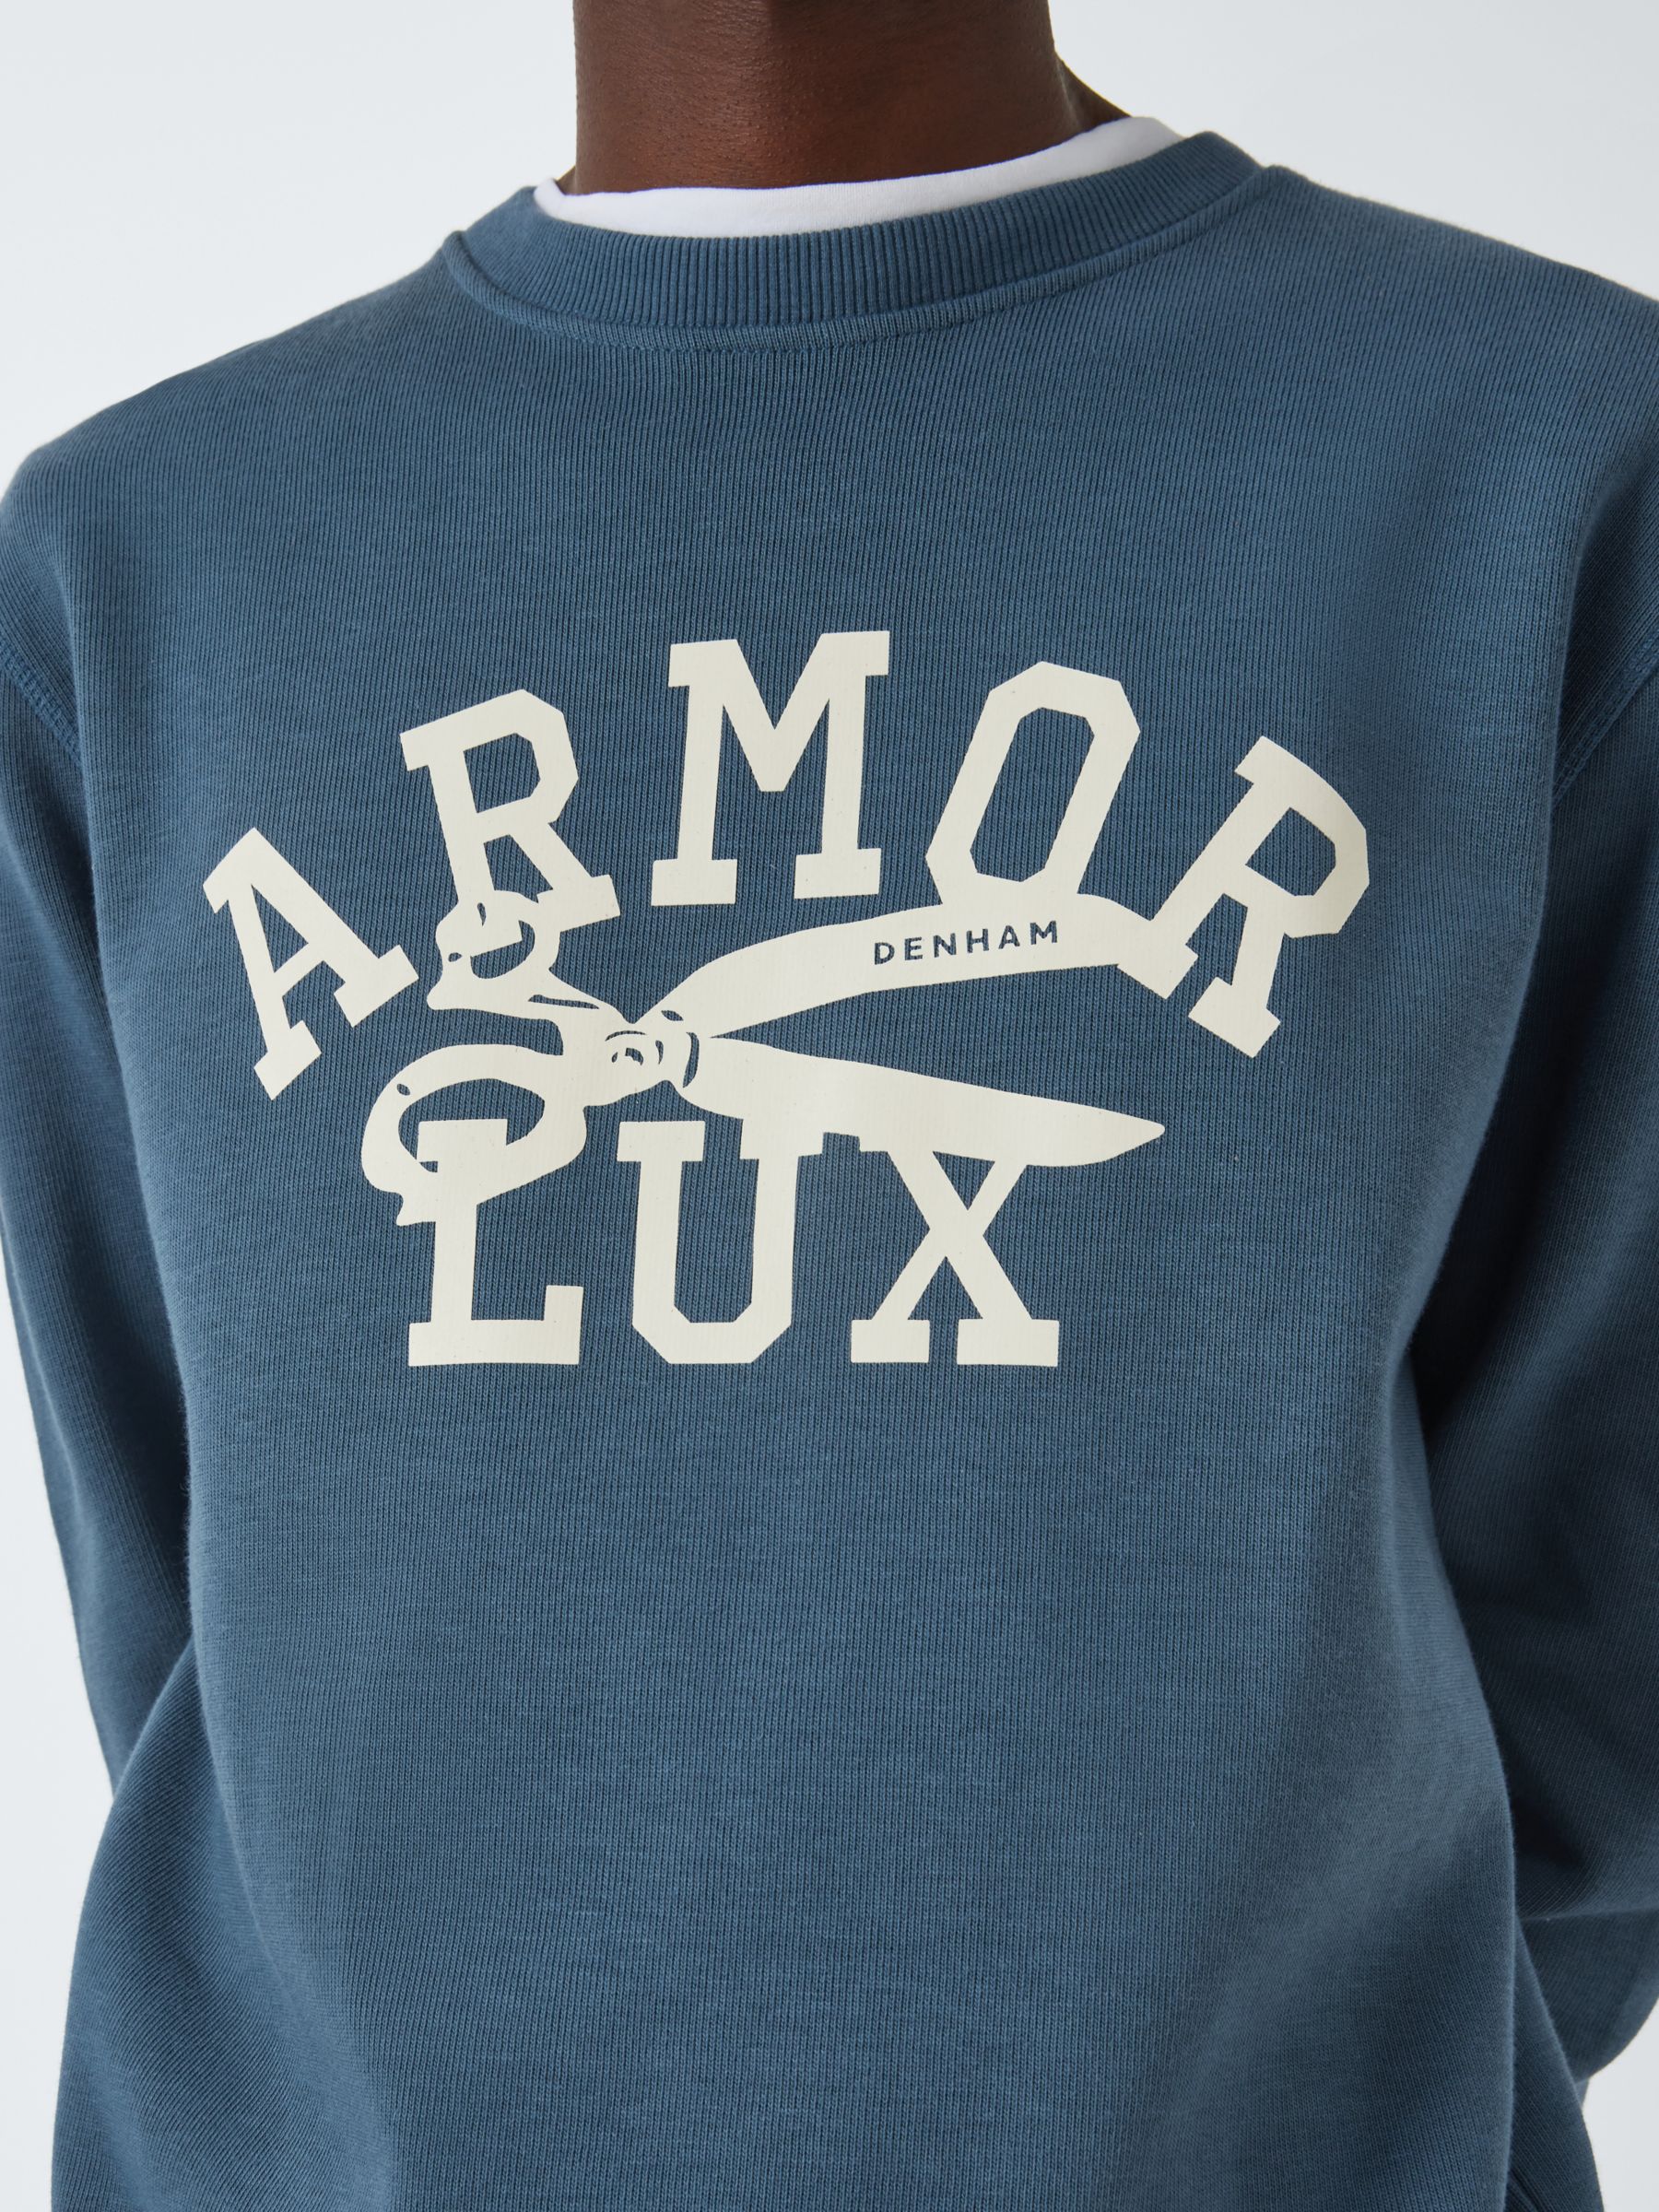 Armor Lux x Denham Long Sleeve Jumper, Blue, M